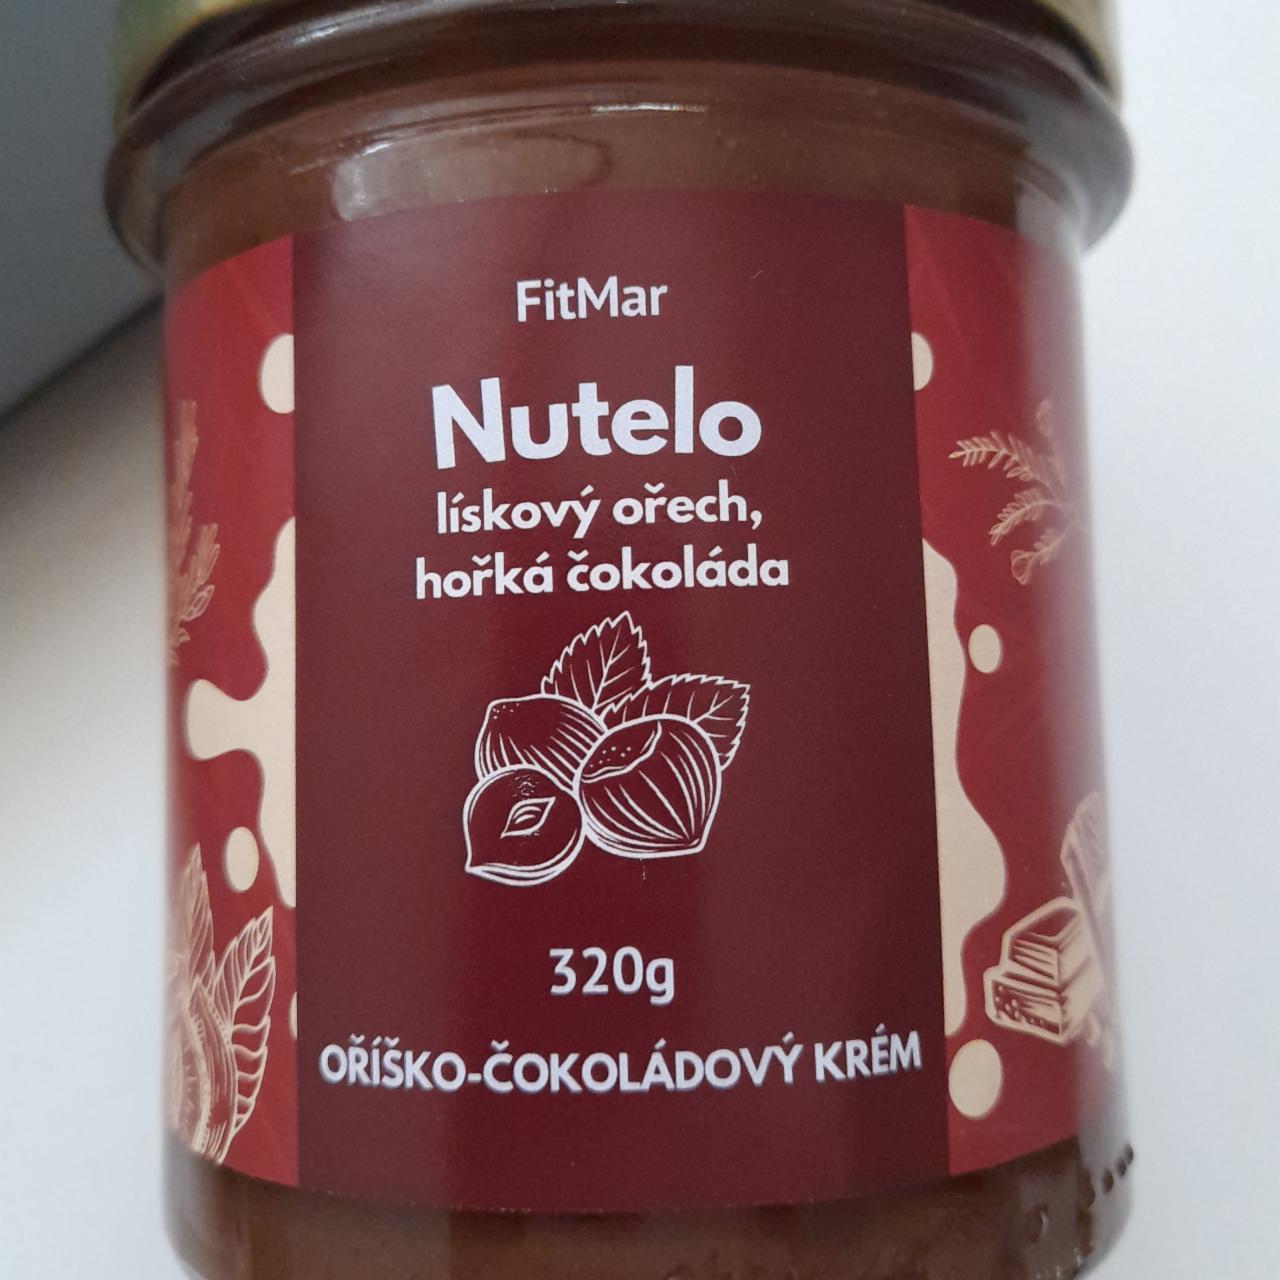 Fotografie - Nutelo lískový ořech, hořká čokoláda FitMar